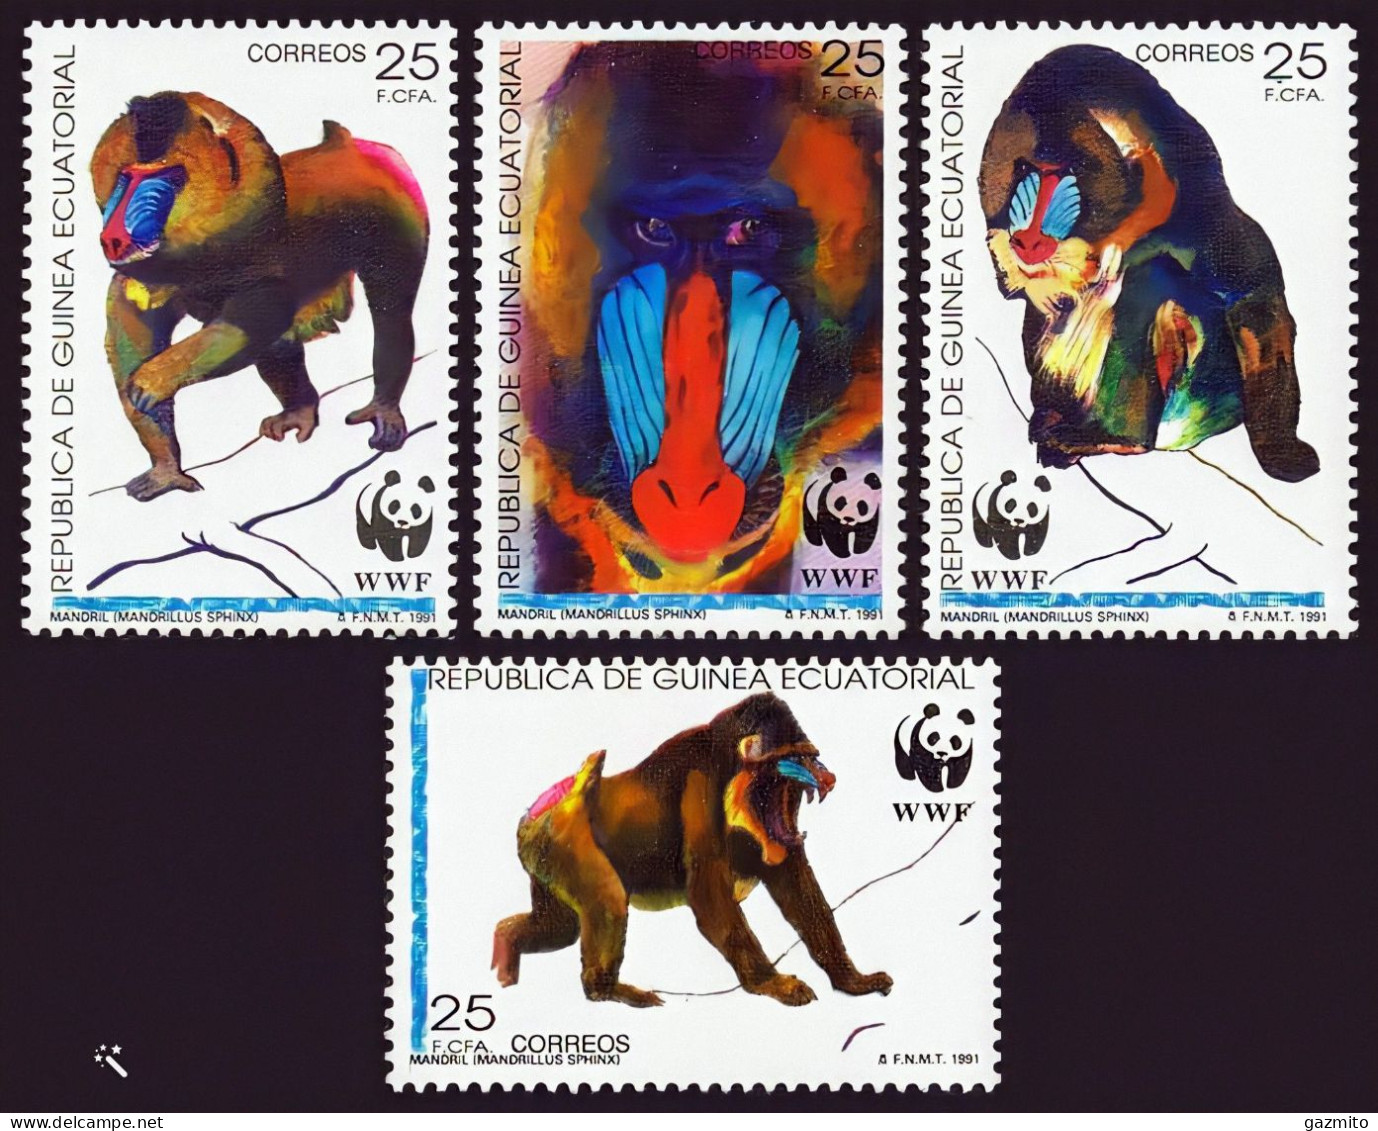 Guinea Equat. 1991, Wwf, Baboons, 4val - Singes